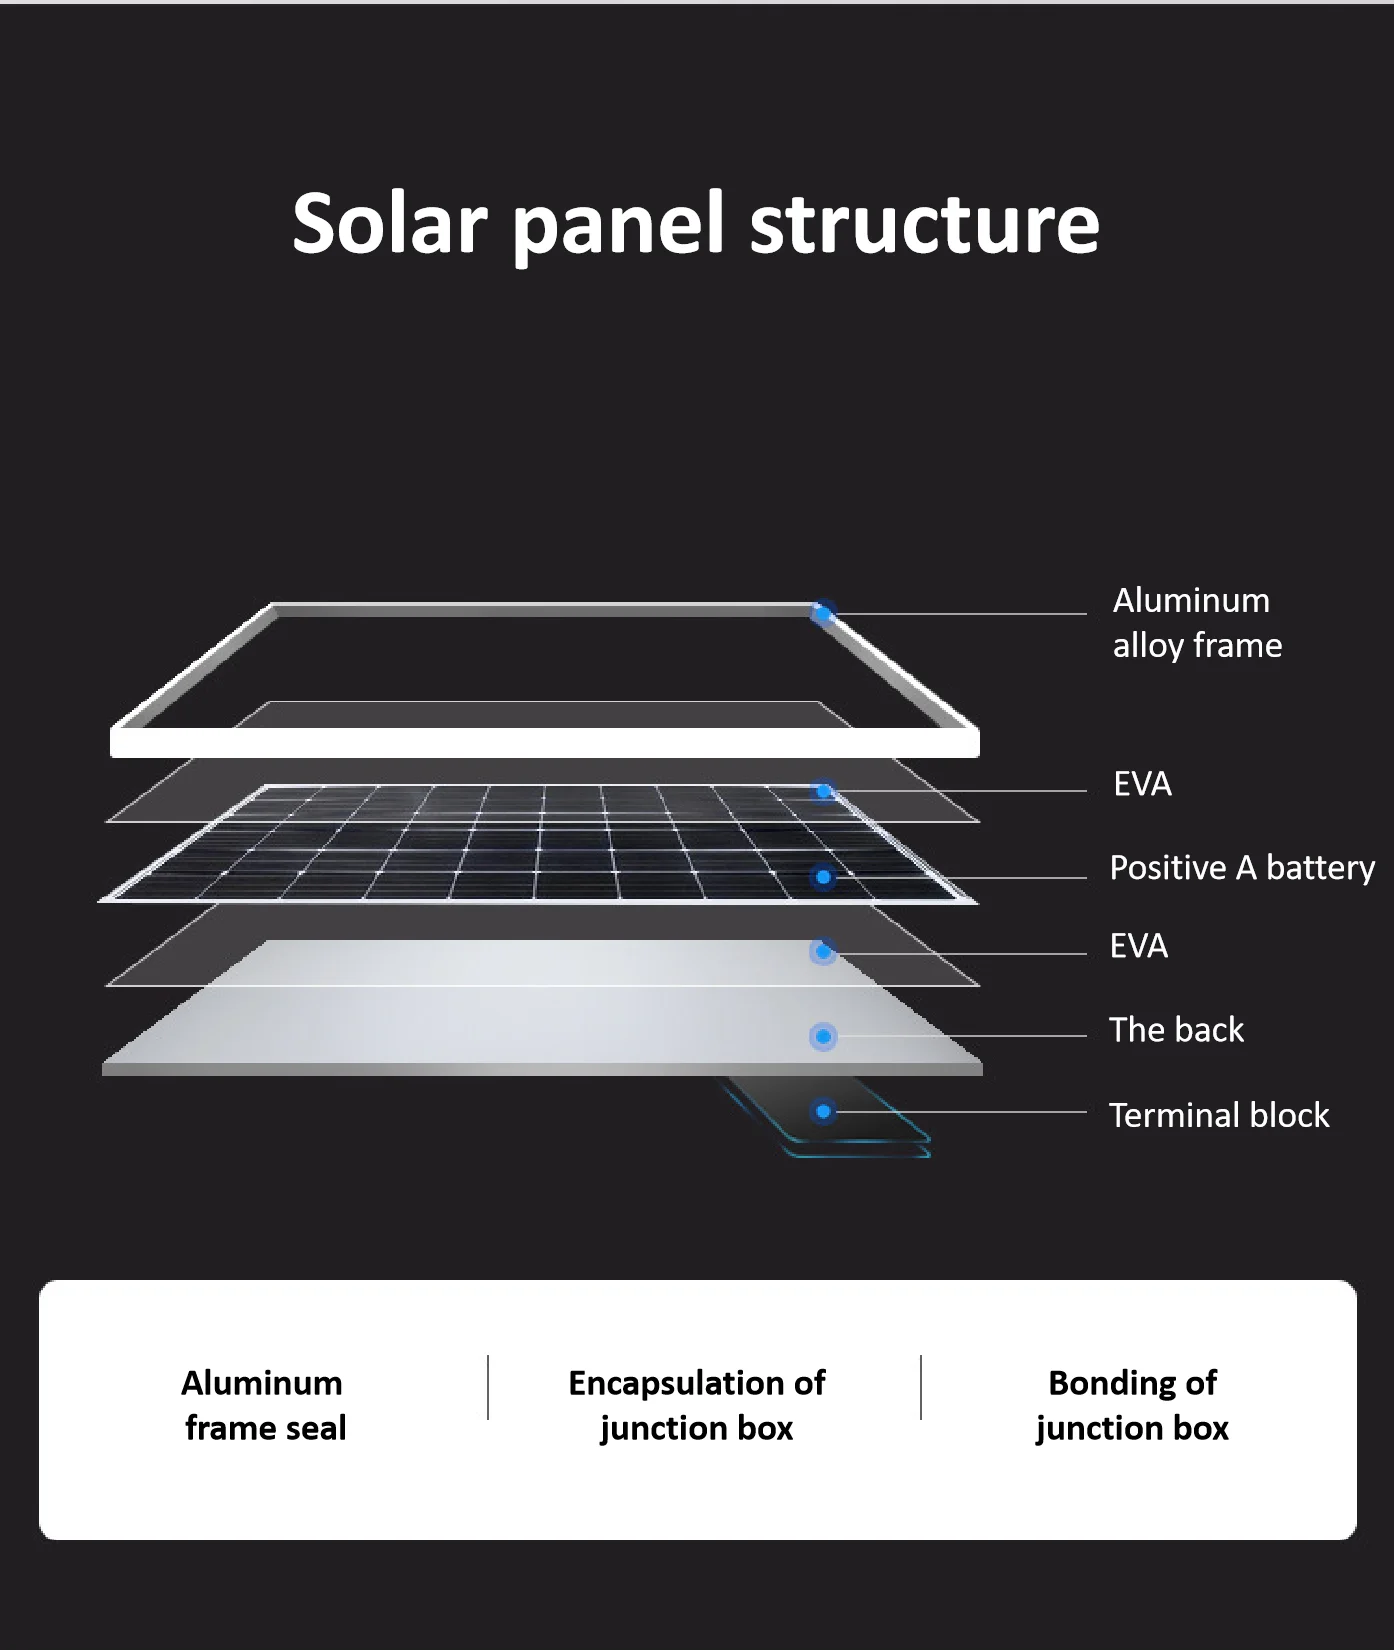 Mono Half Cell Solar PV Panel 440W Anodized Aluminium Alloy Frame 25kg